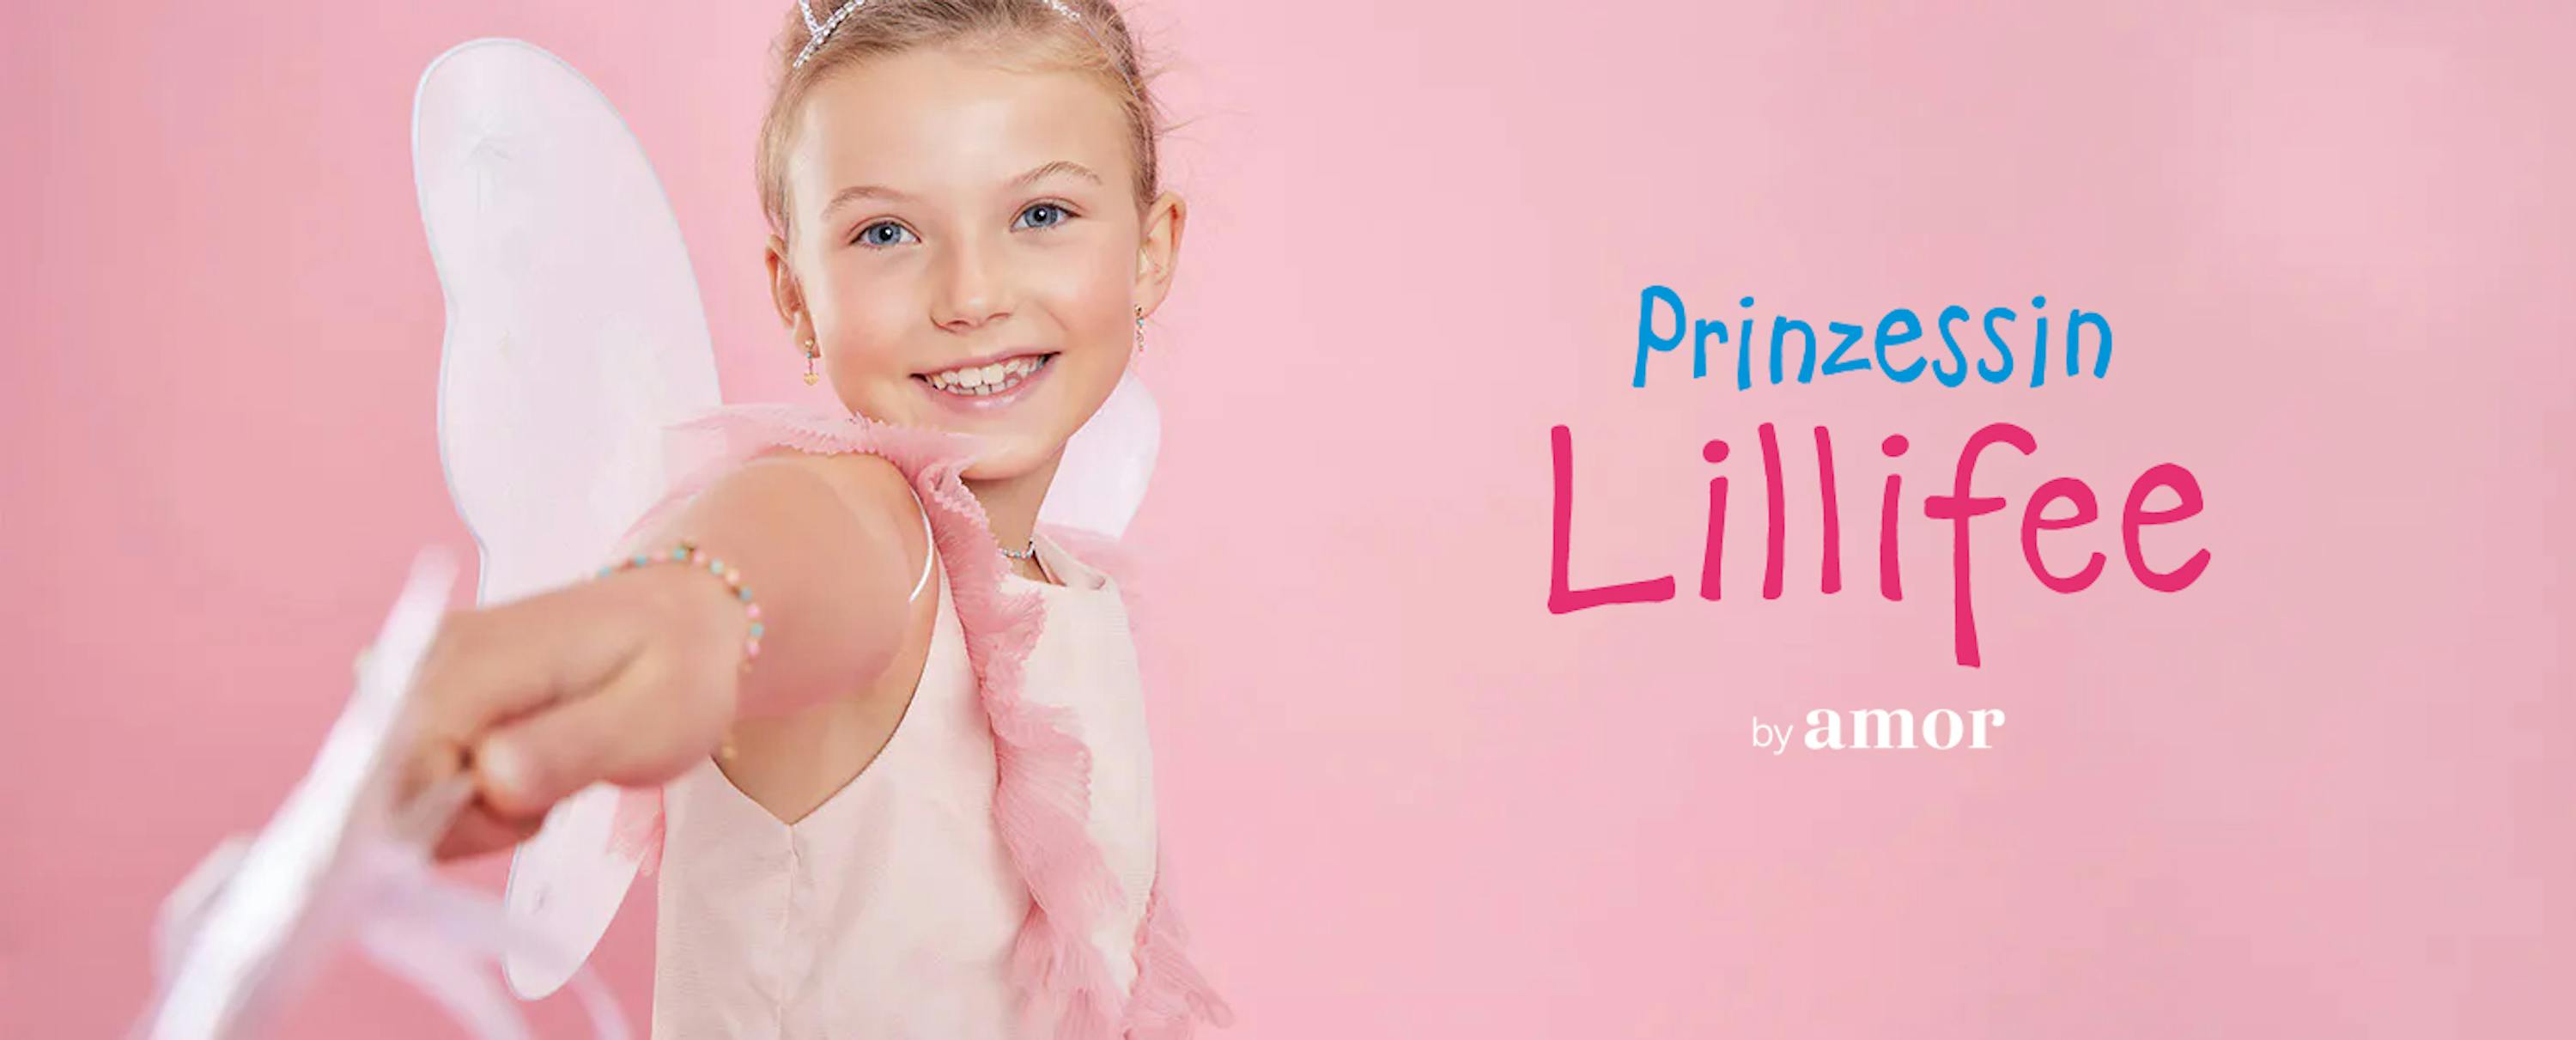 Prinzessin Lillifee Schmuck | Amor Online Shop